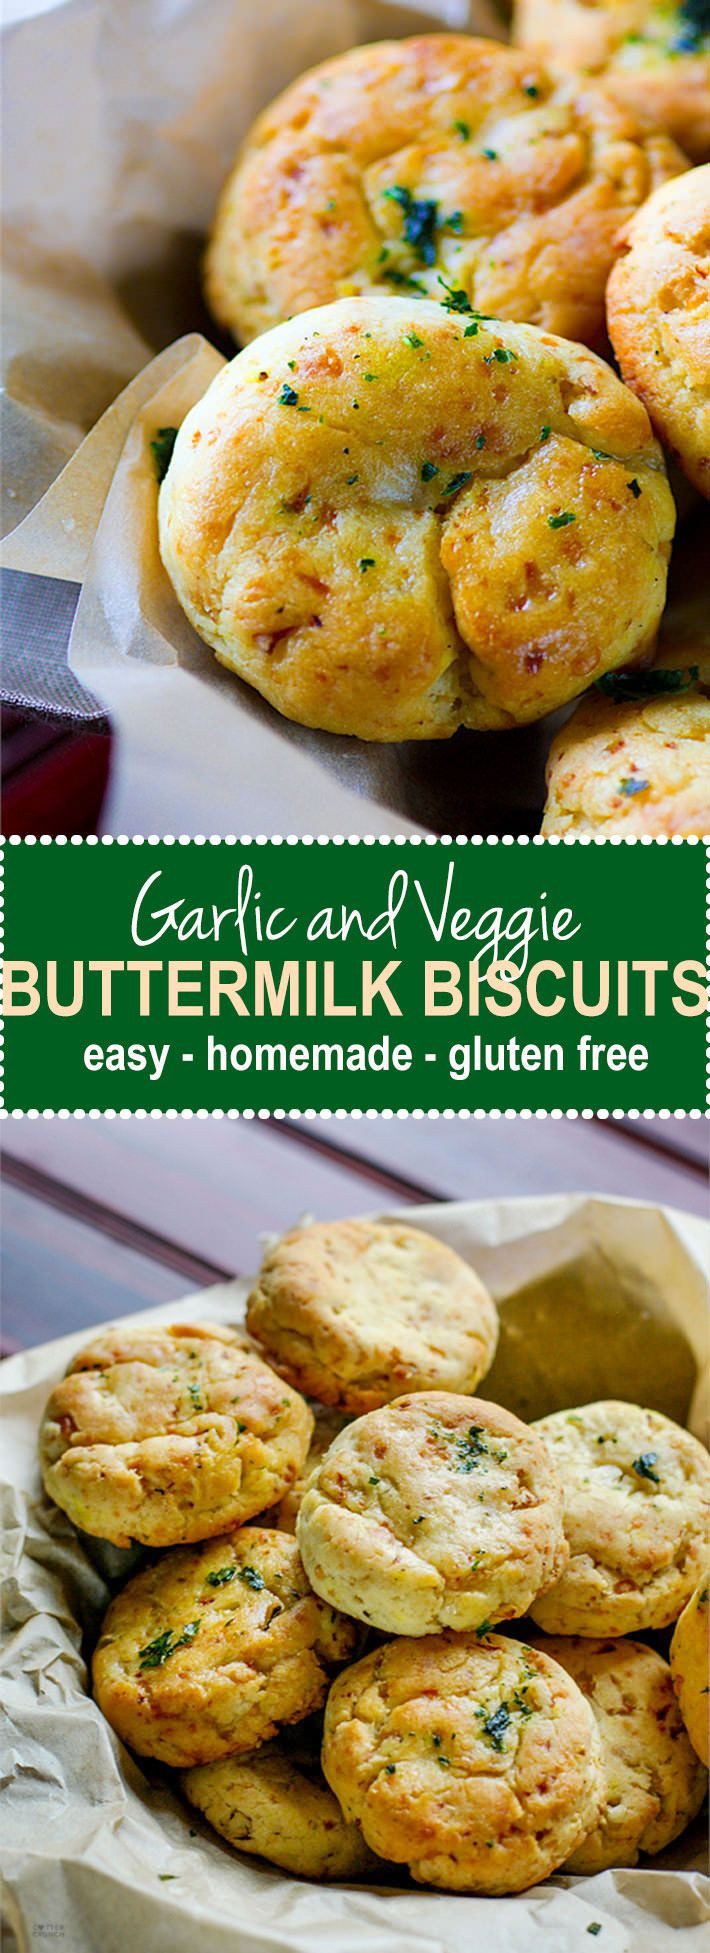 Easy Healthy Gluten Free Recipes
 Healthy Recipes Easy Homemade Gluten Free Buttermilk